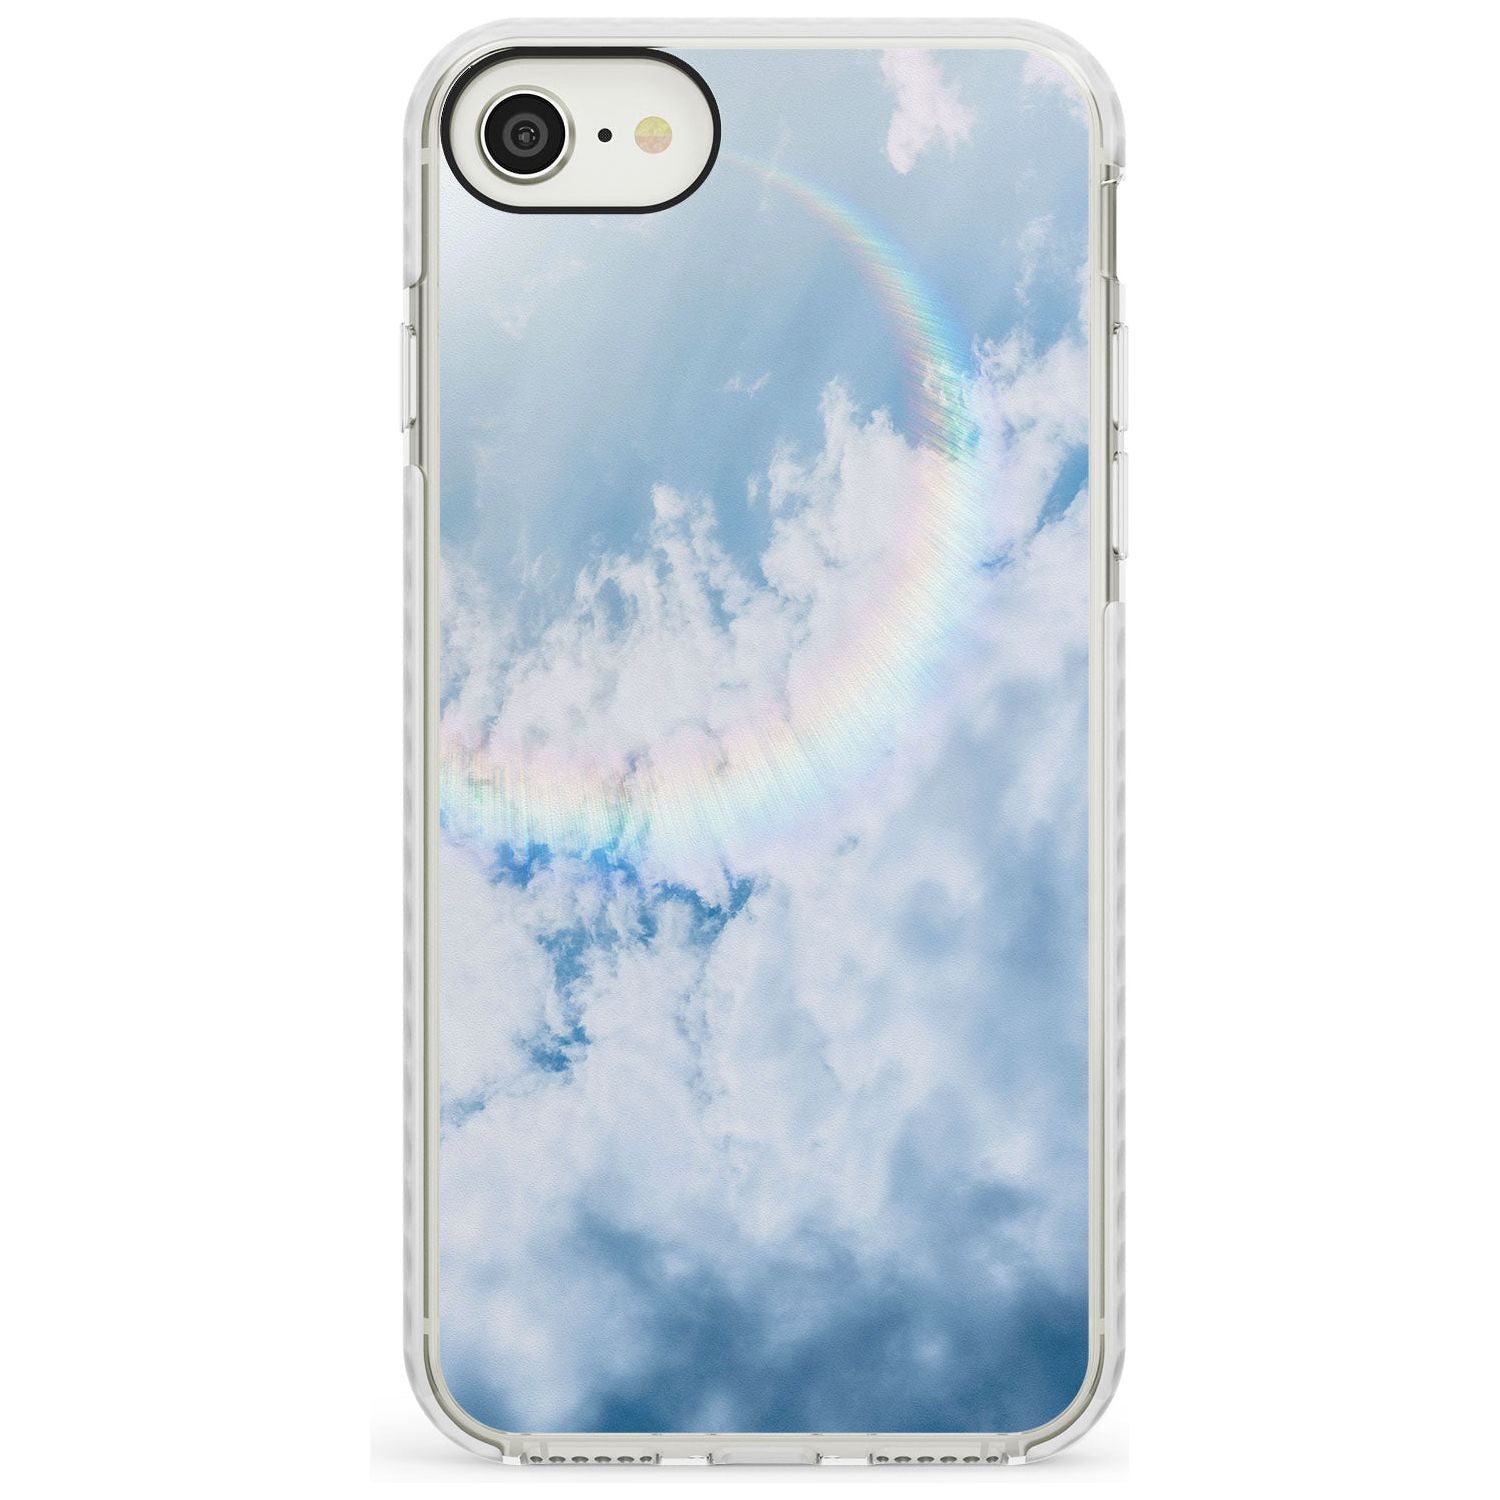 Rainbow Light Flare Photograph Impact Phone Case for iPhone SE 8 7 Plus